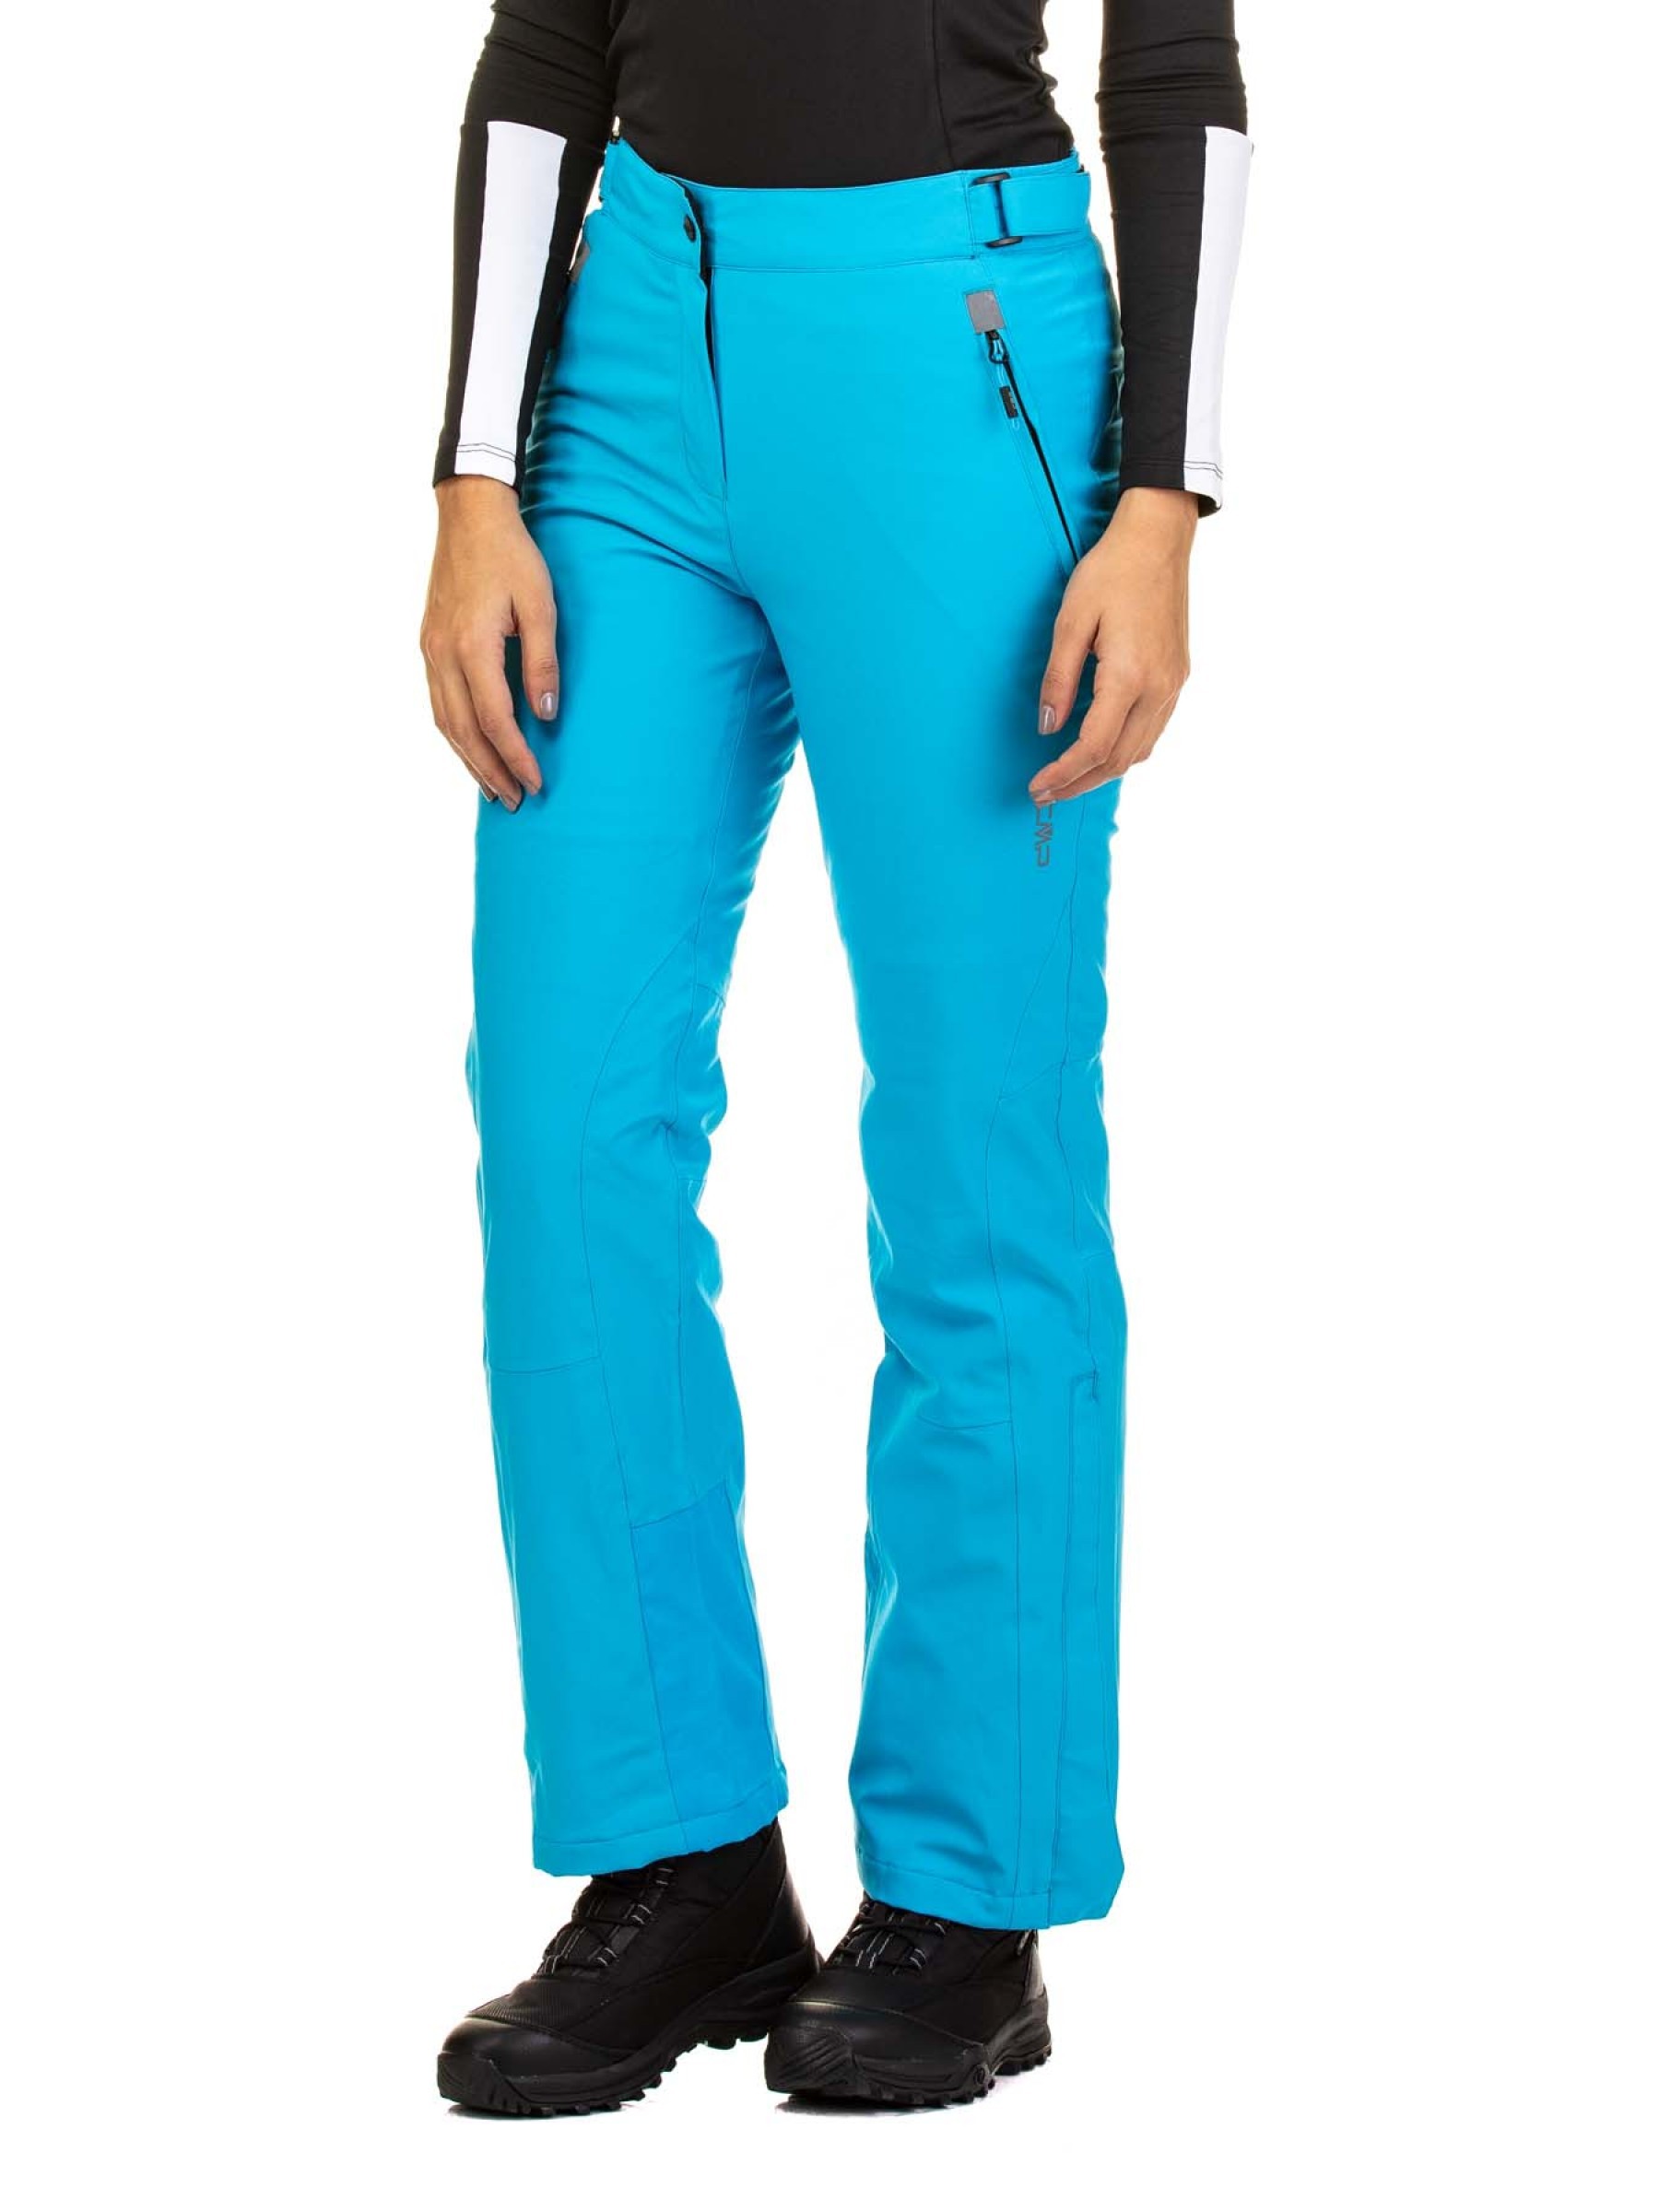 Details about   CMP Ski Pants Snowboard Pants Woman Trousers Blau Windproof Waterproof Warming 